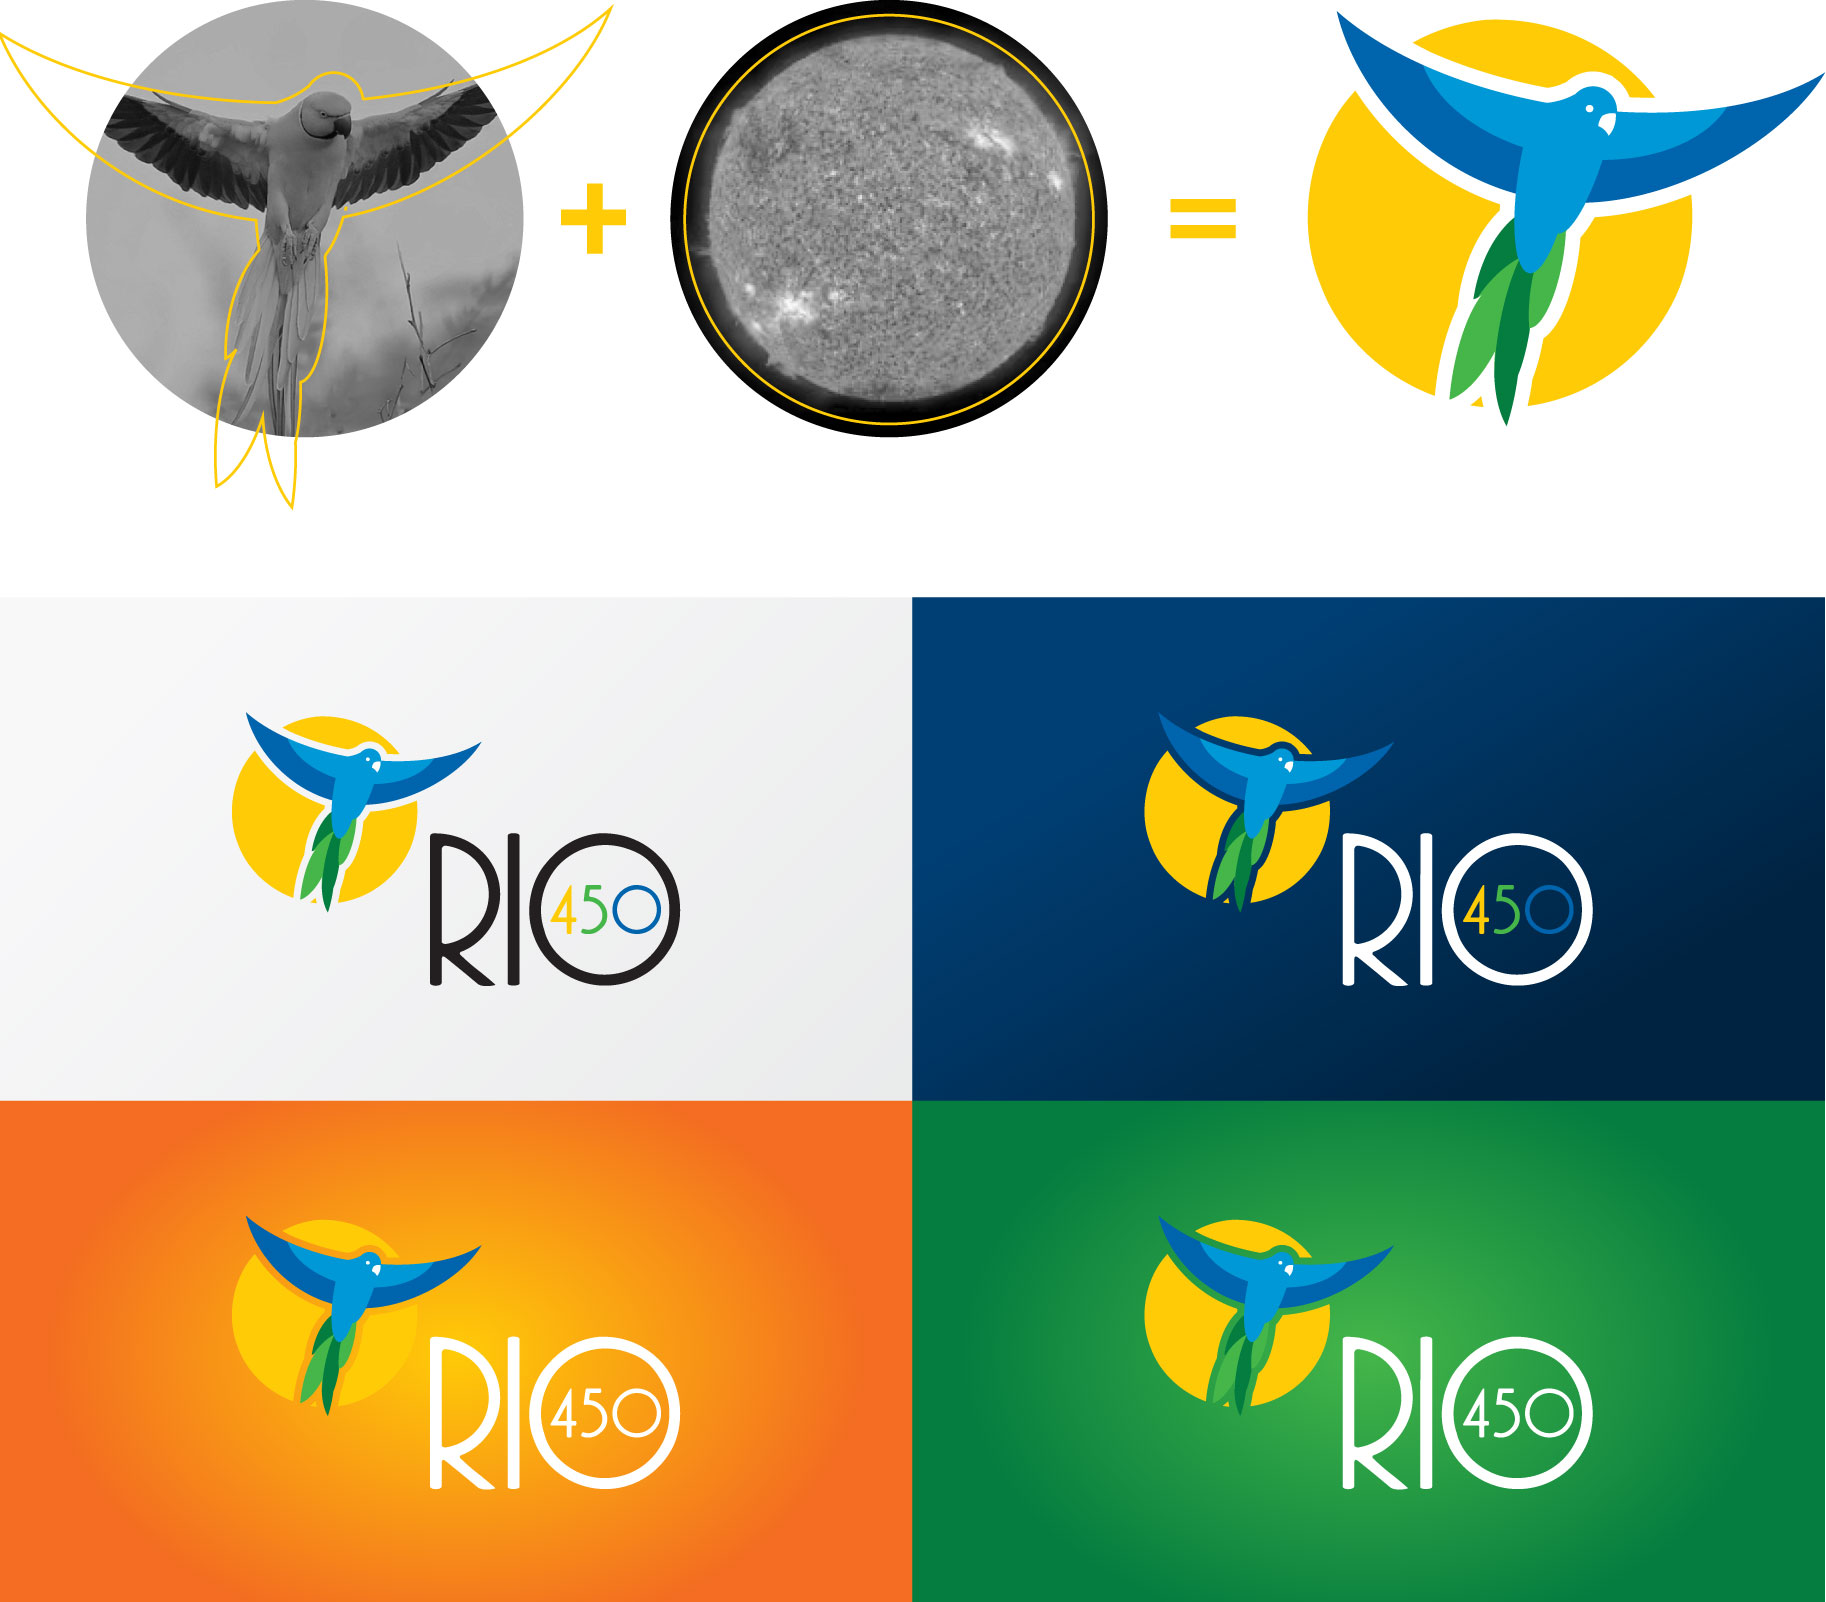 RIO 450 Logo Design Color Variants and Inspiration